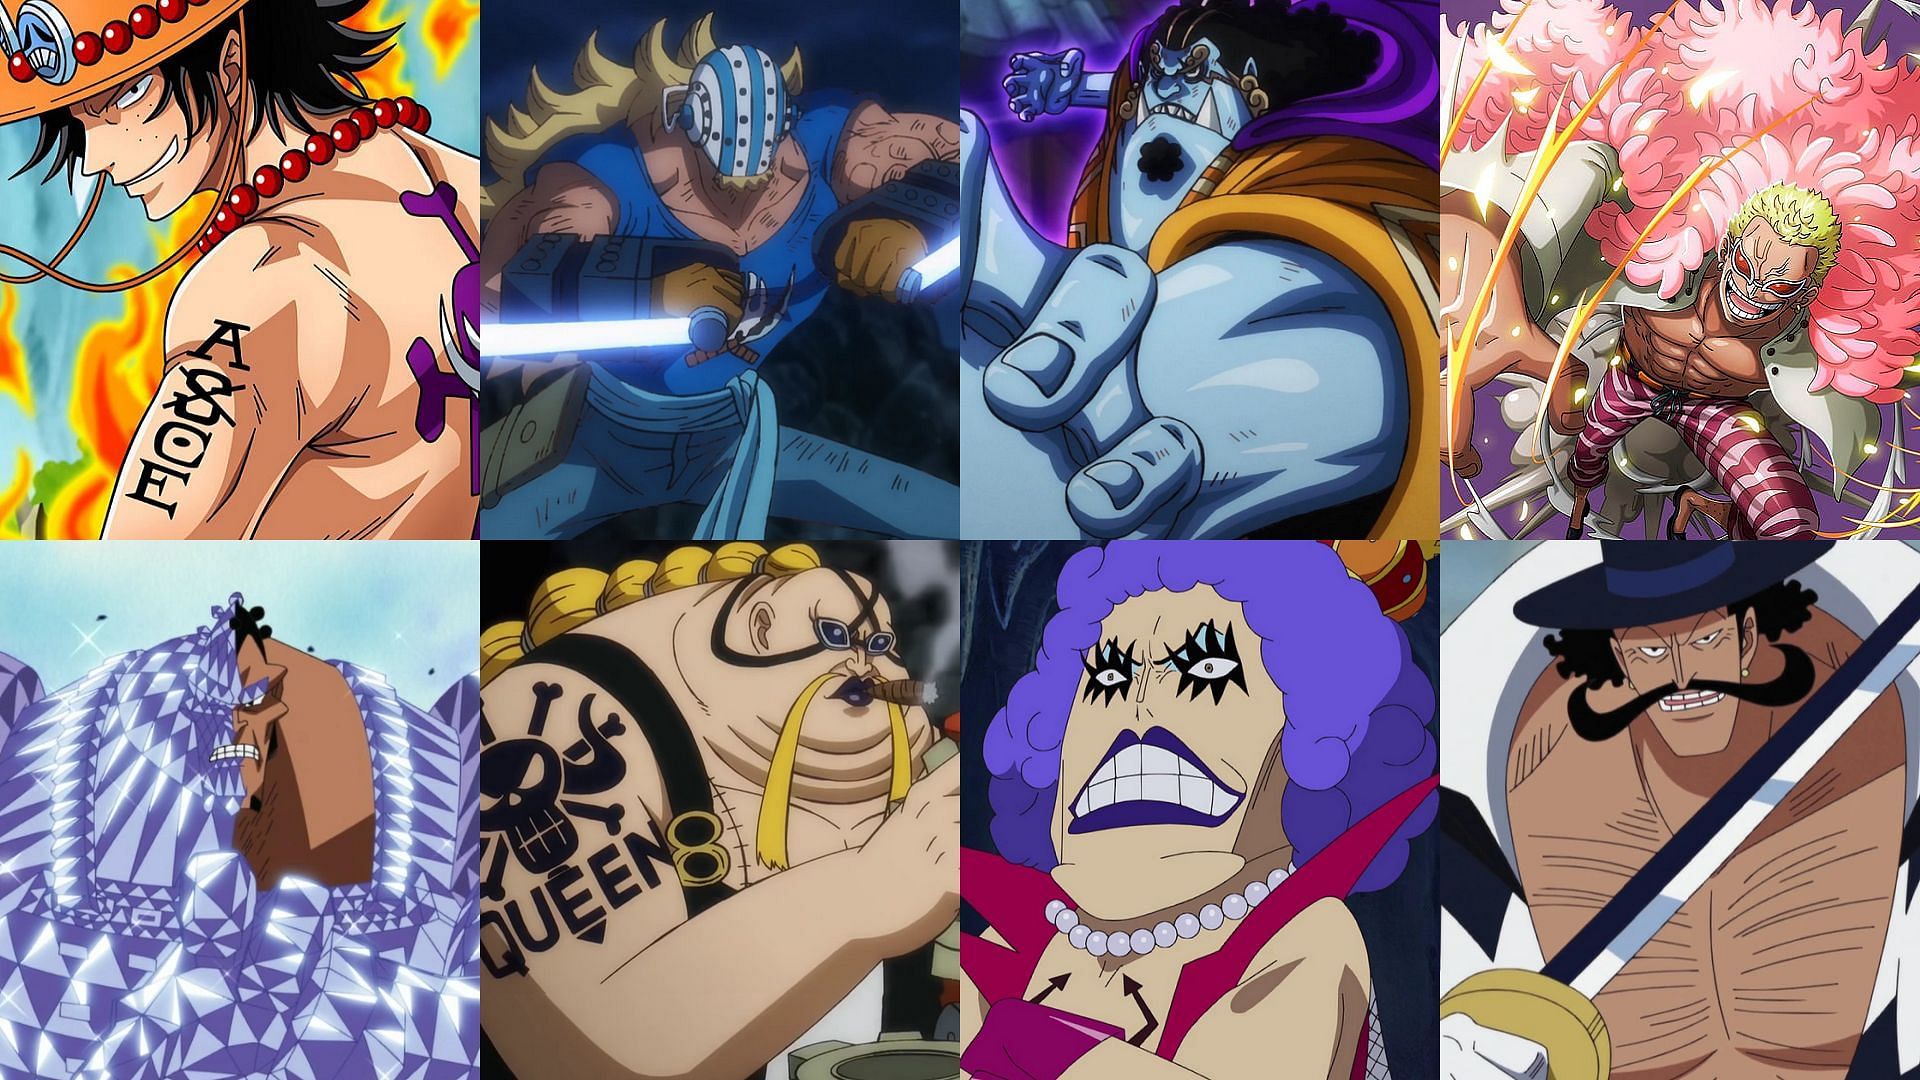 Ace, Jozu, Killer, Queen, Jinbe, Emporio Ivankov, Doflamingo and Vista (Image via Toei Animation, One Piece)